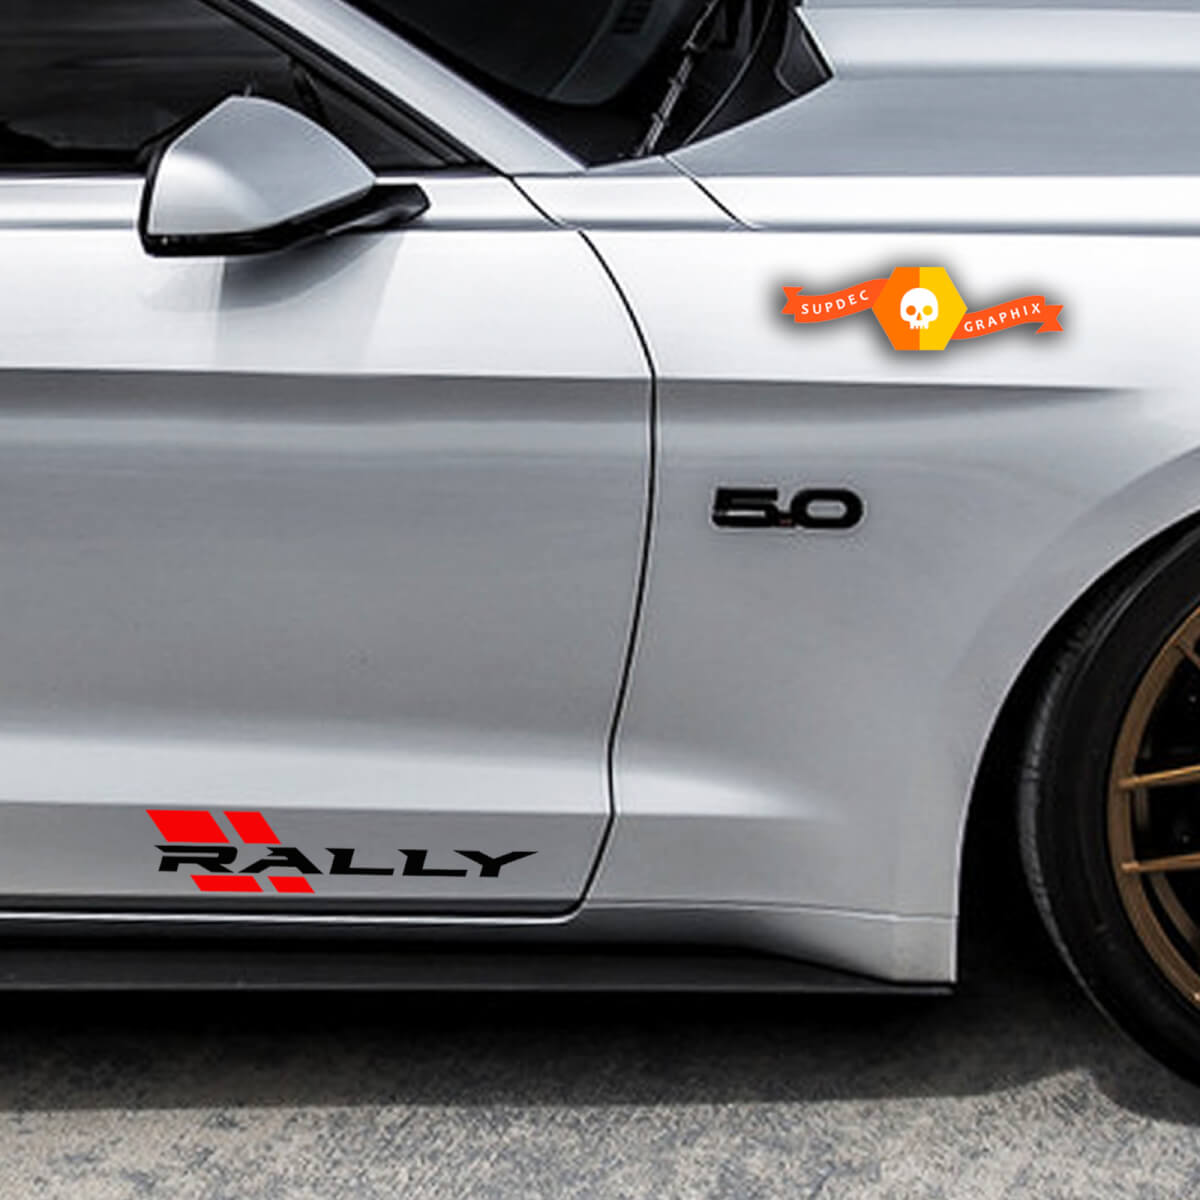 RALLY RACING Sport Performance Auto LKW SUV Vinyl Aufkleber Aufkleber Emblem 2pc Paar